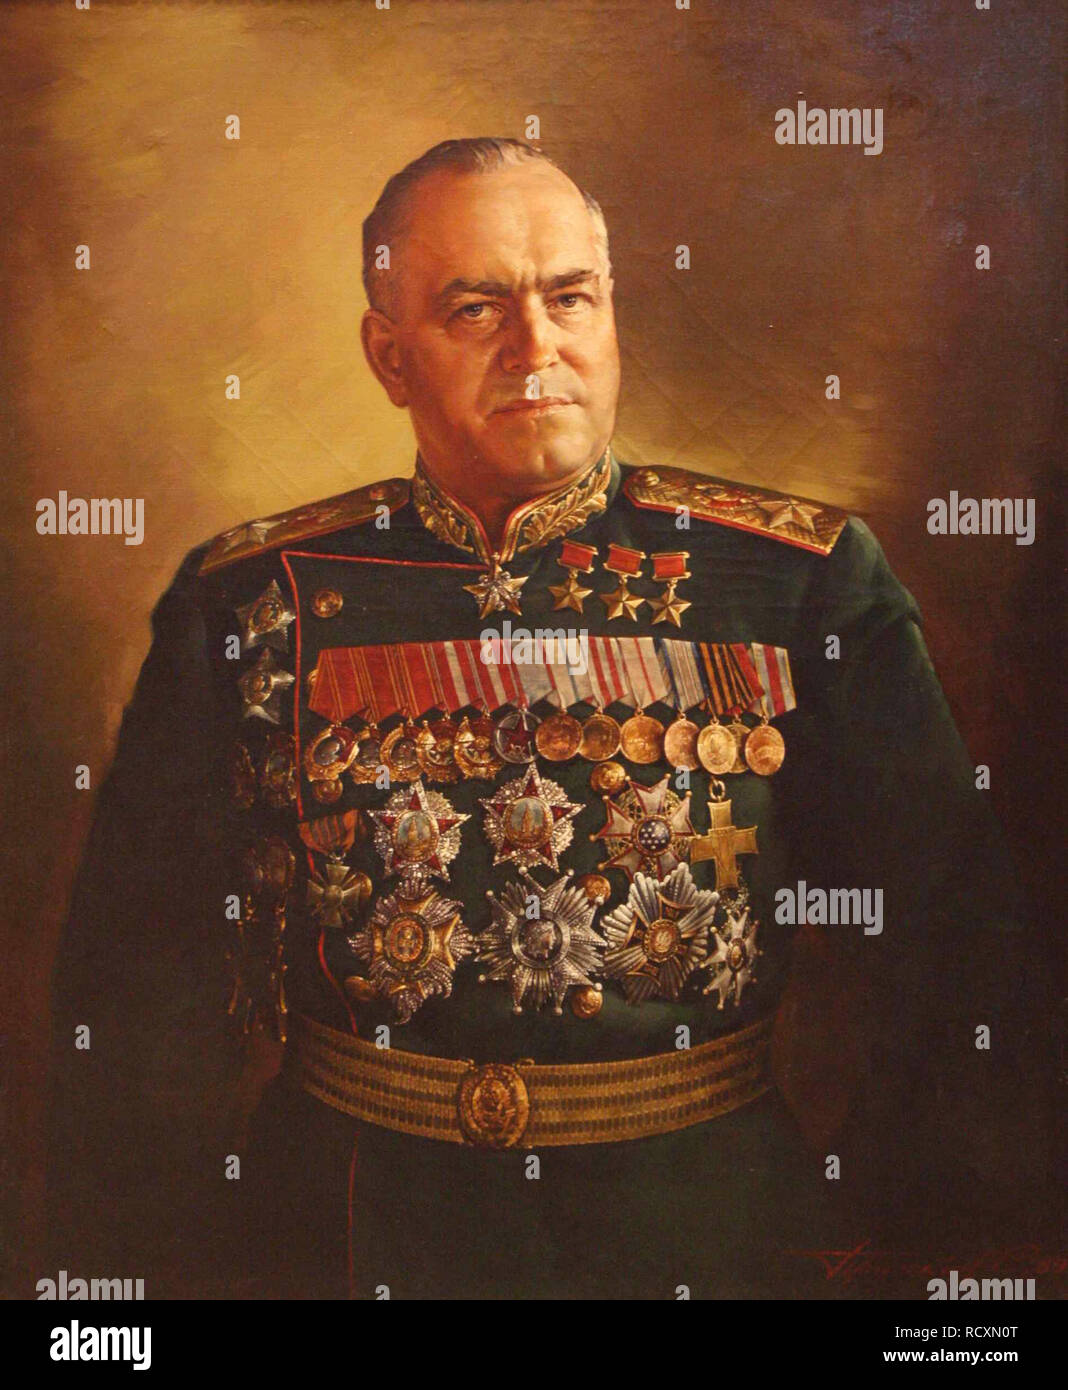 Portrait of Marshal Georgy Konstantinovich Zhukov (1896-1974). Museum: M. B. Grekov Military Artists Studio, Moscow. Author: Prisekin, Sergei Nikolaevich. Stock Photo